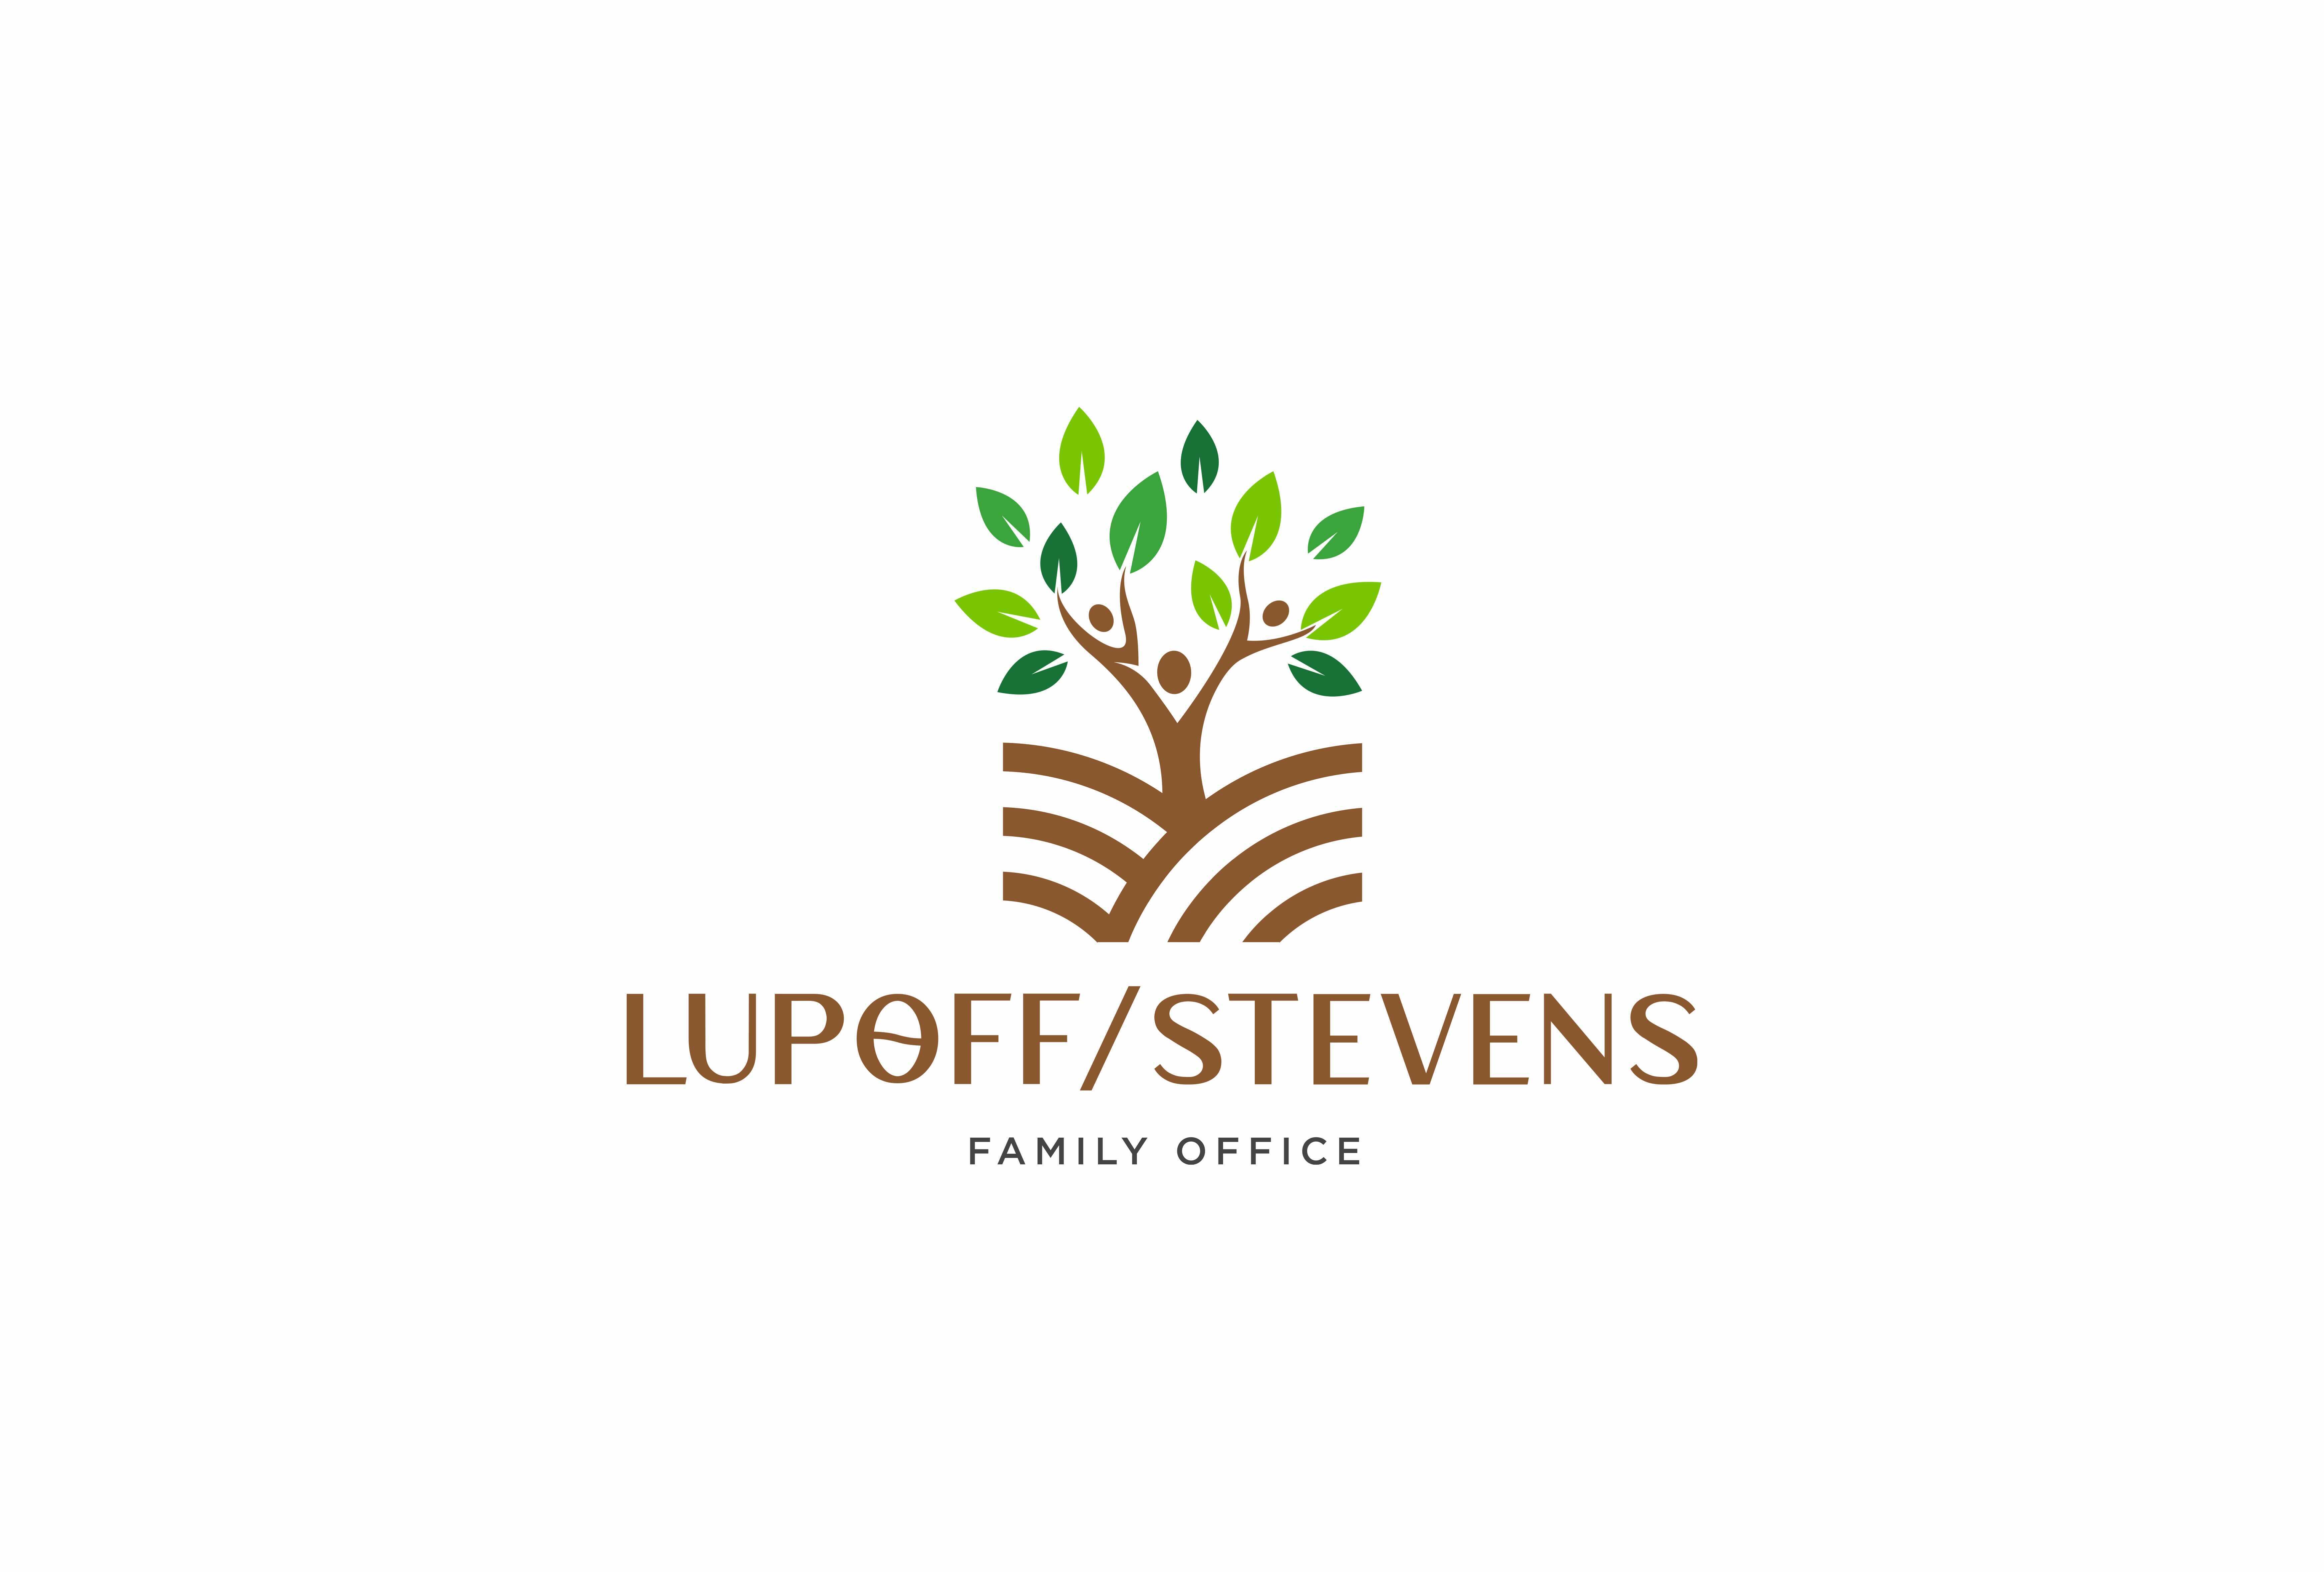 Lupoff/Stevens Family Office